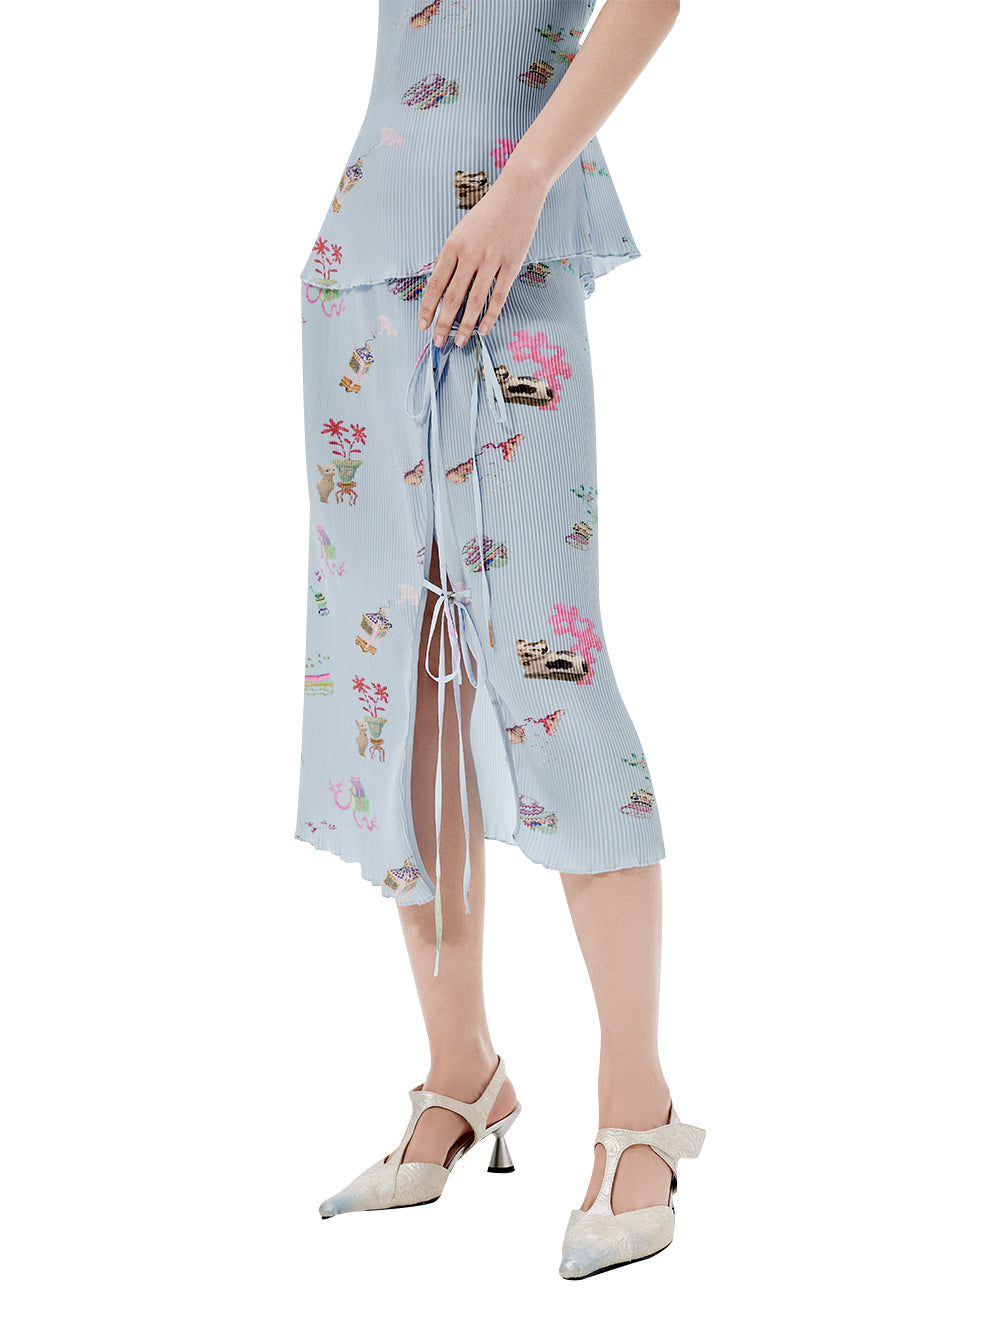 MUKZIN Printed Side Slit Lace-up Skirt